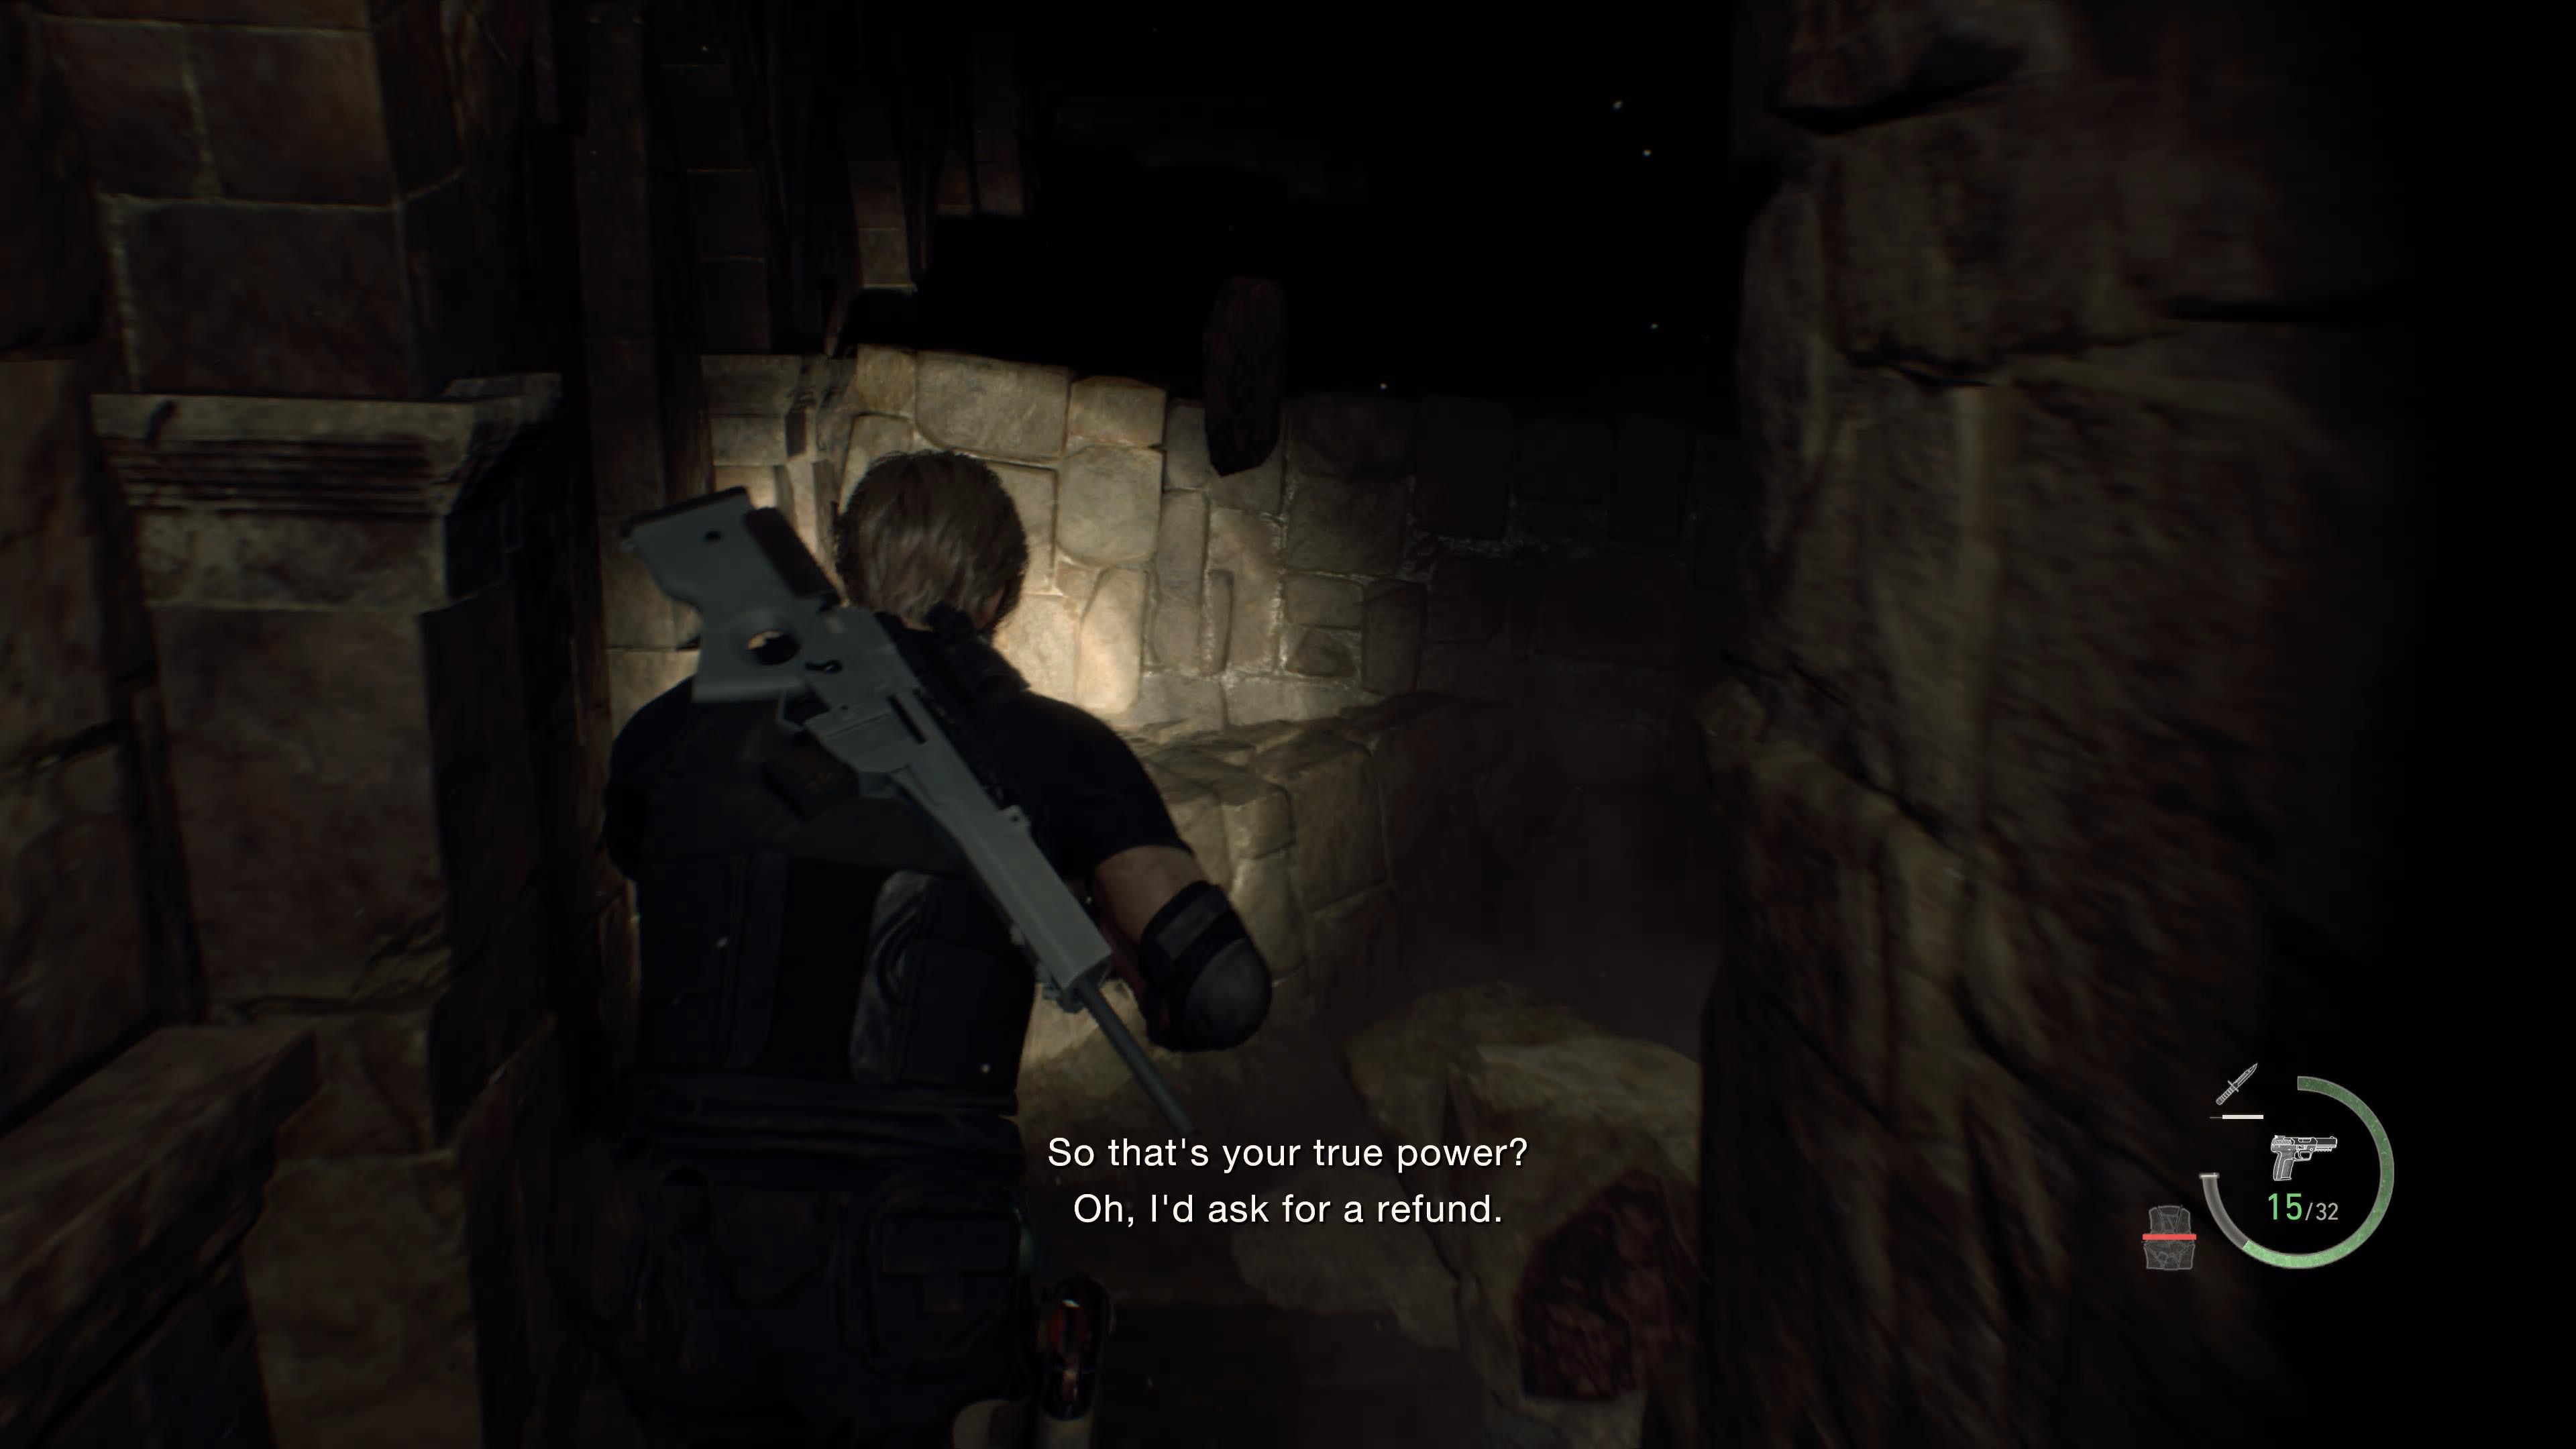 Krauser (Ruins): How to easily beat Krauser (Ruins) boss fight in Resident  Evil 4 remake